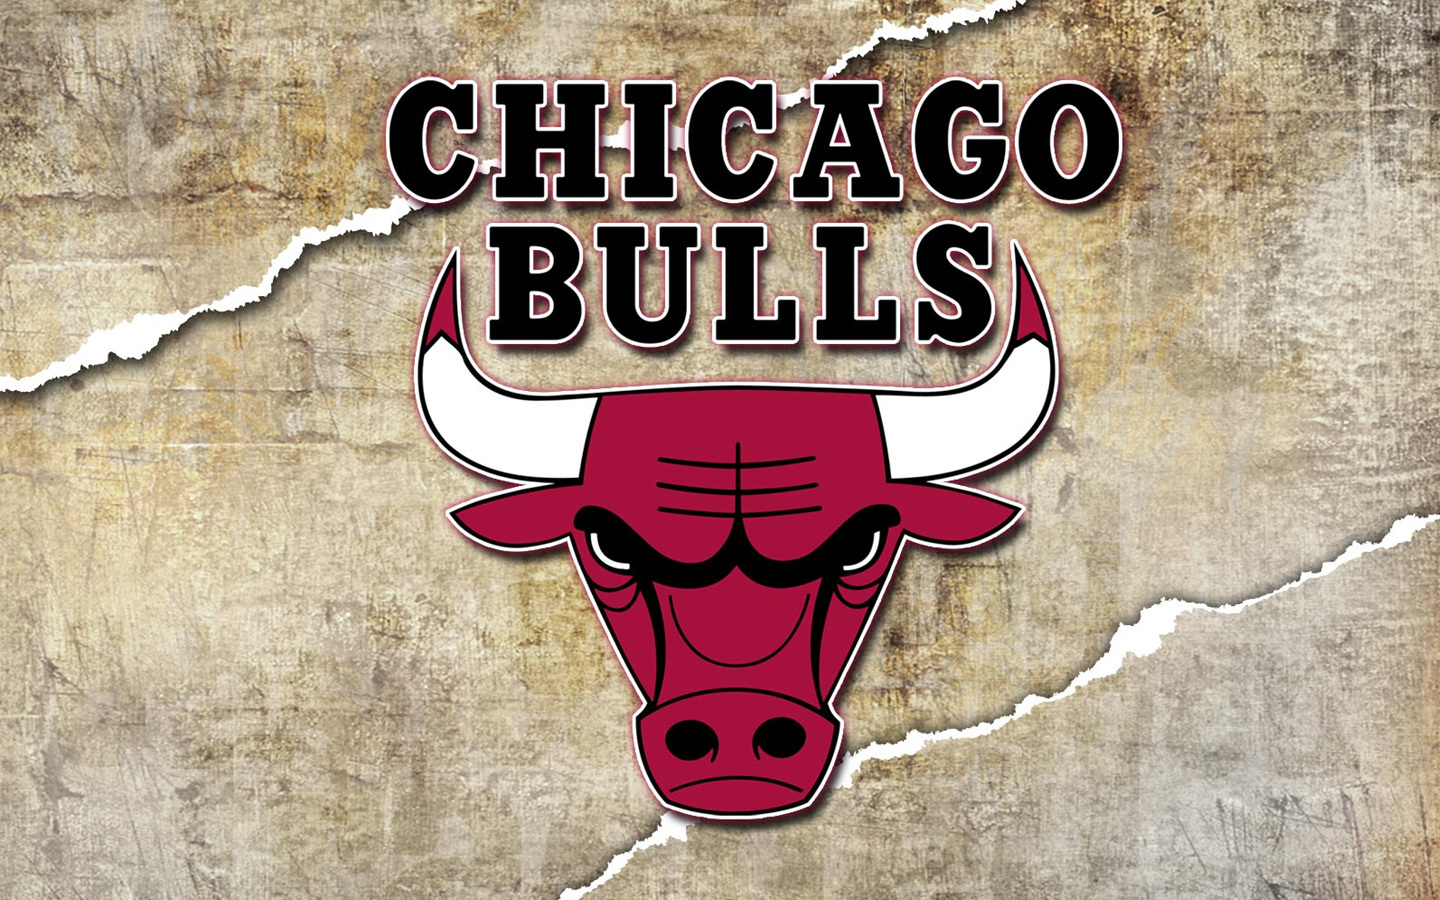 Chicago bulls эмблема